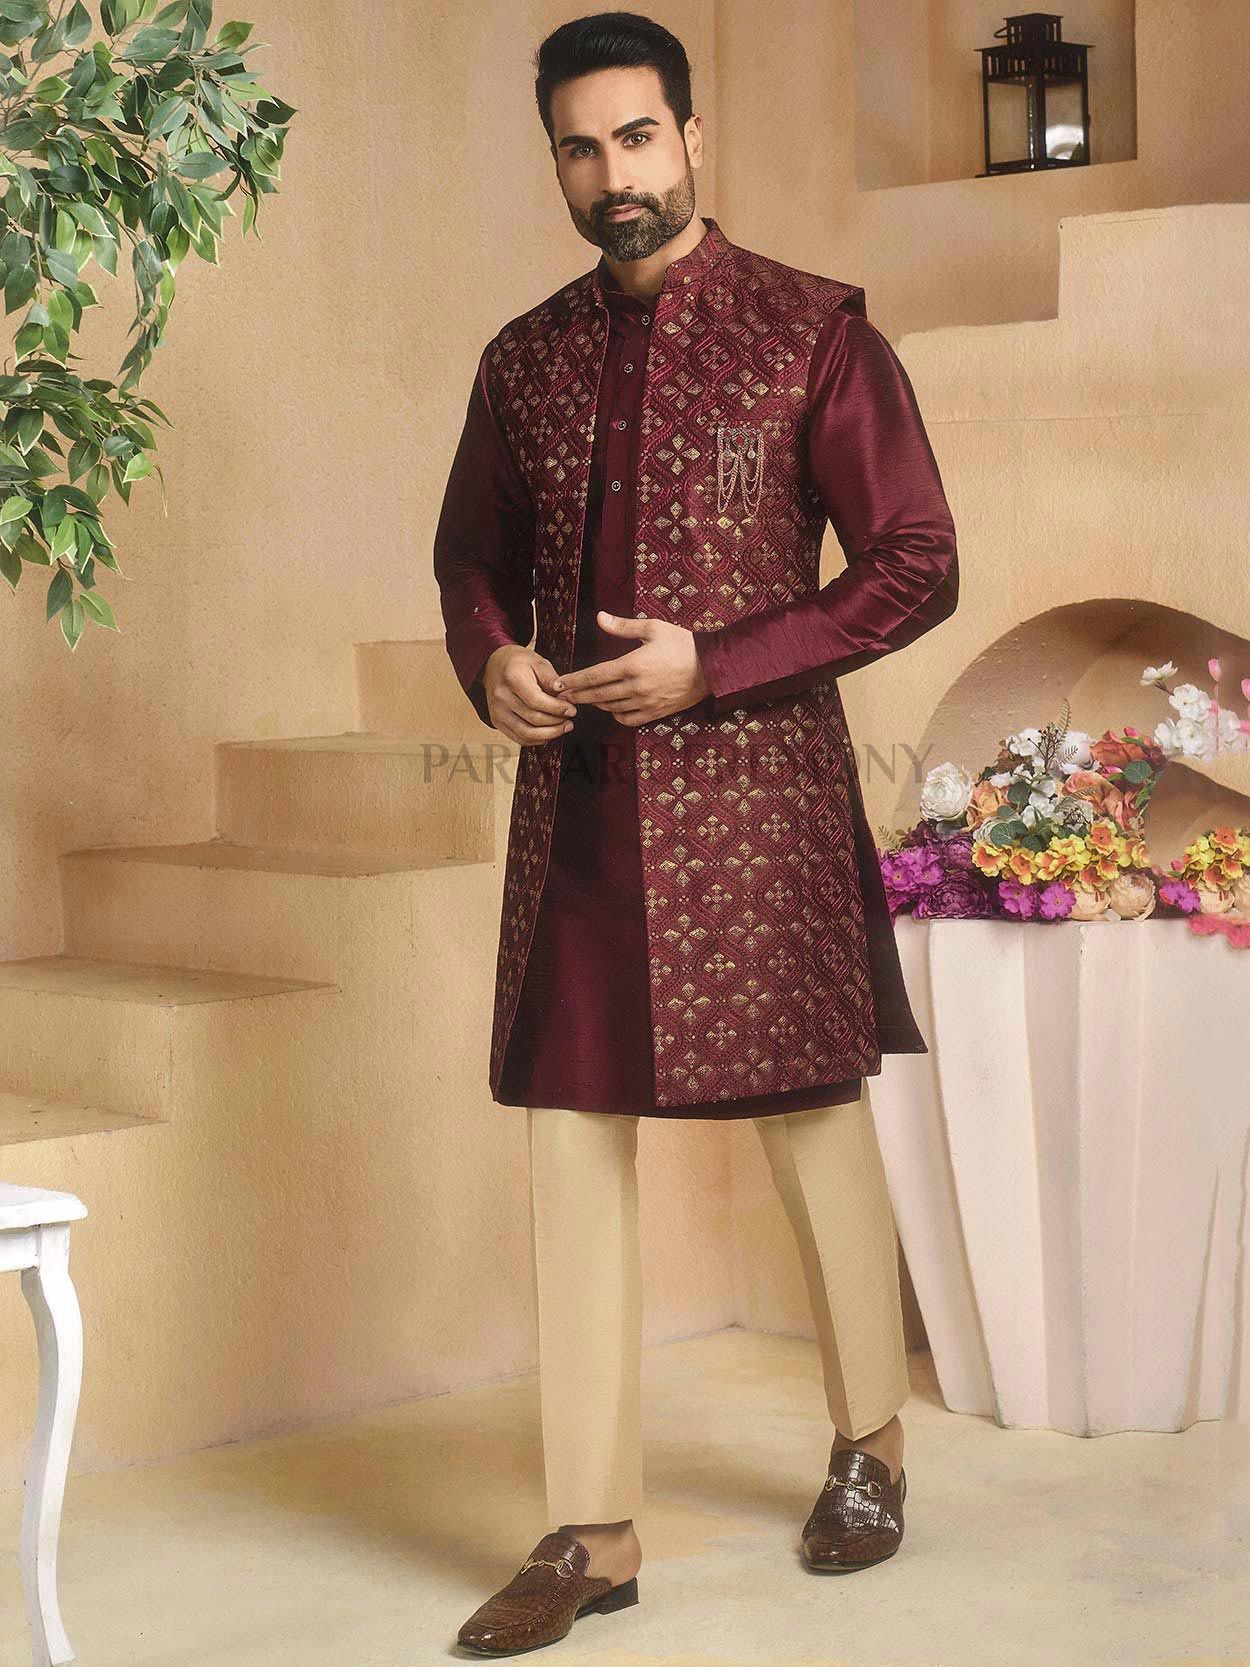 Silk Mens Kurta Pajama With Jacket at Rs 2495/piece in Delhi | ID:  7298353612-thanhphatduhoc.com.vn